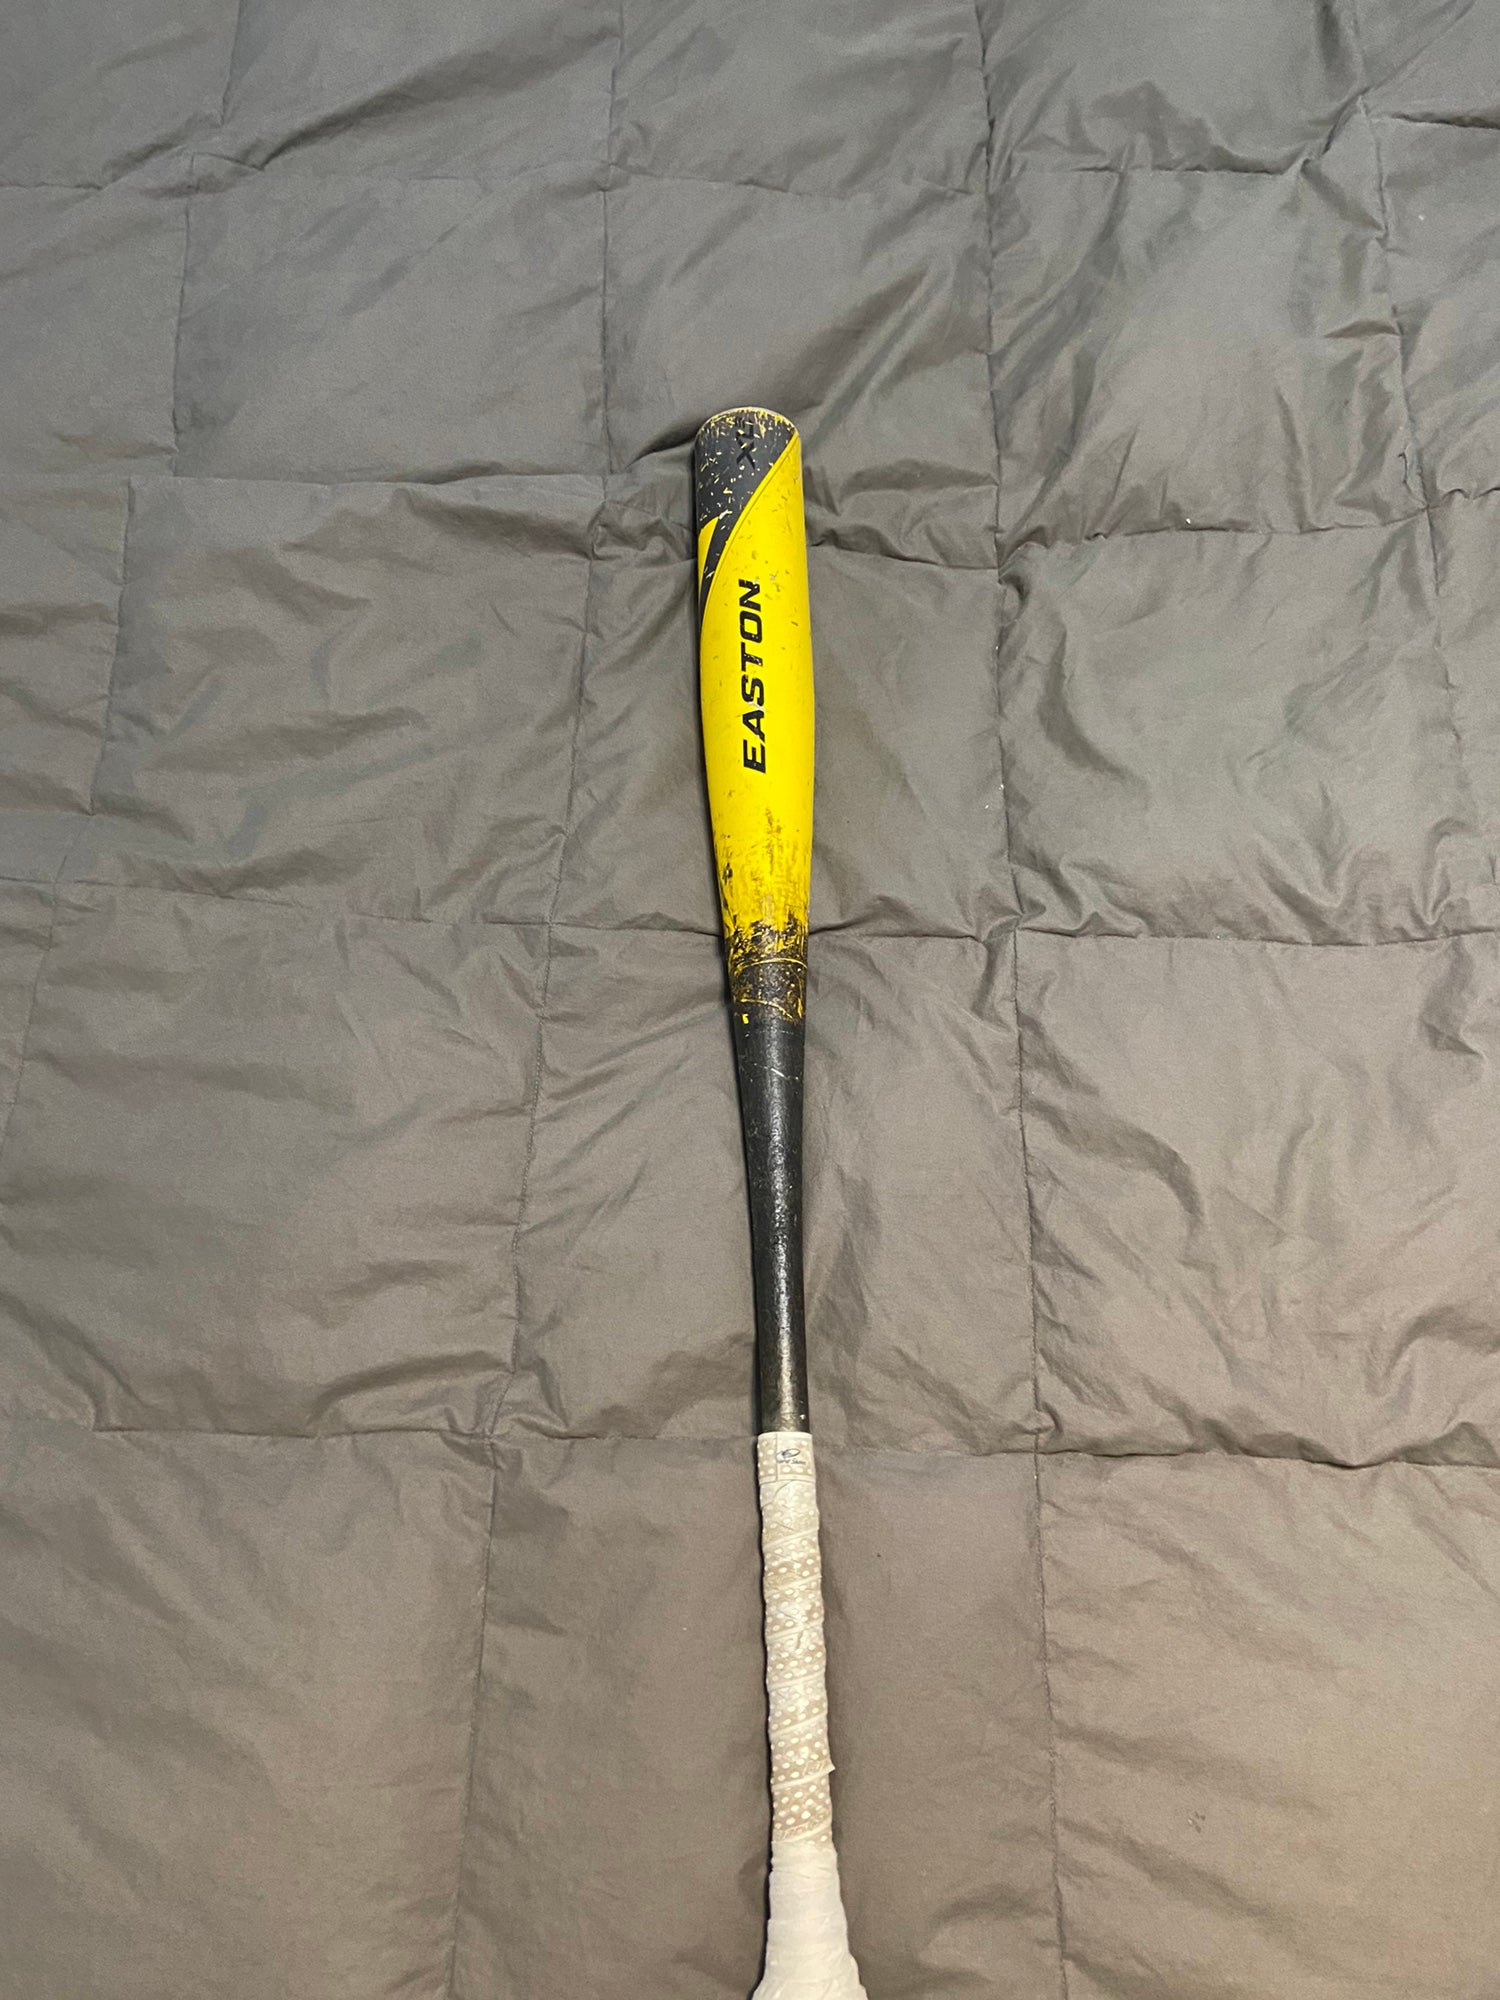 Details about   Used Rare/Hot 2014 Easton XL3 26/16 -10 2 3/4 USSSA Alloy Baseball Bat JBB14X3 